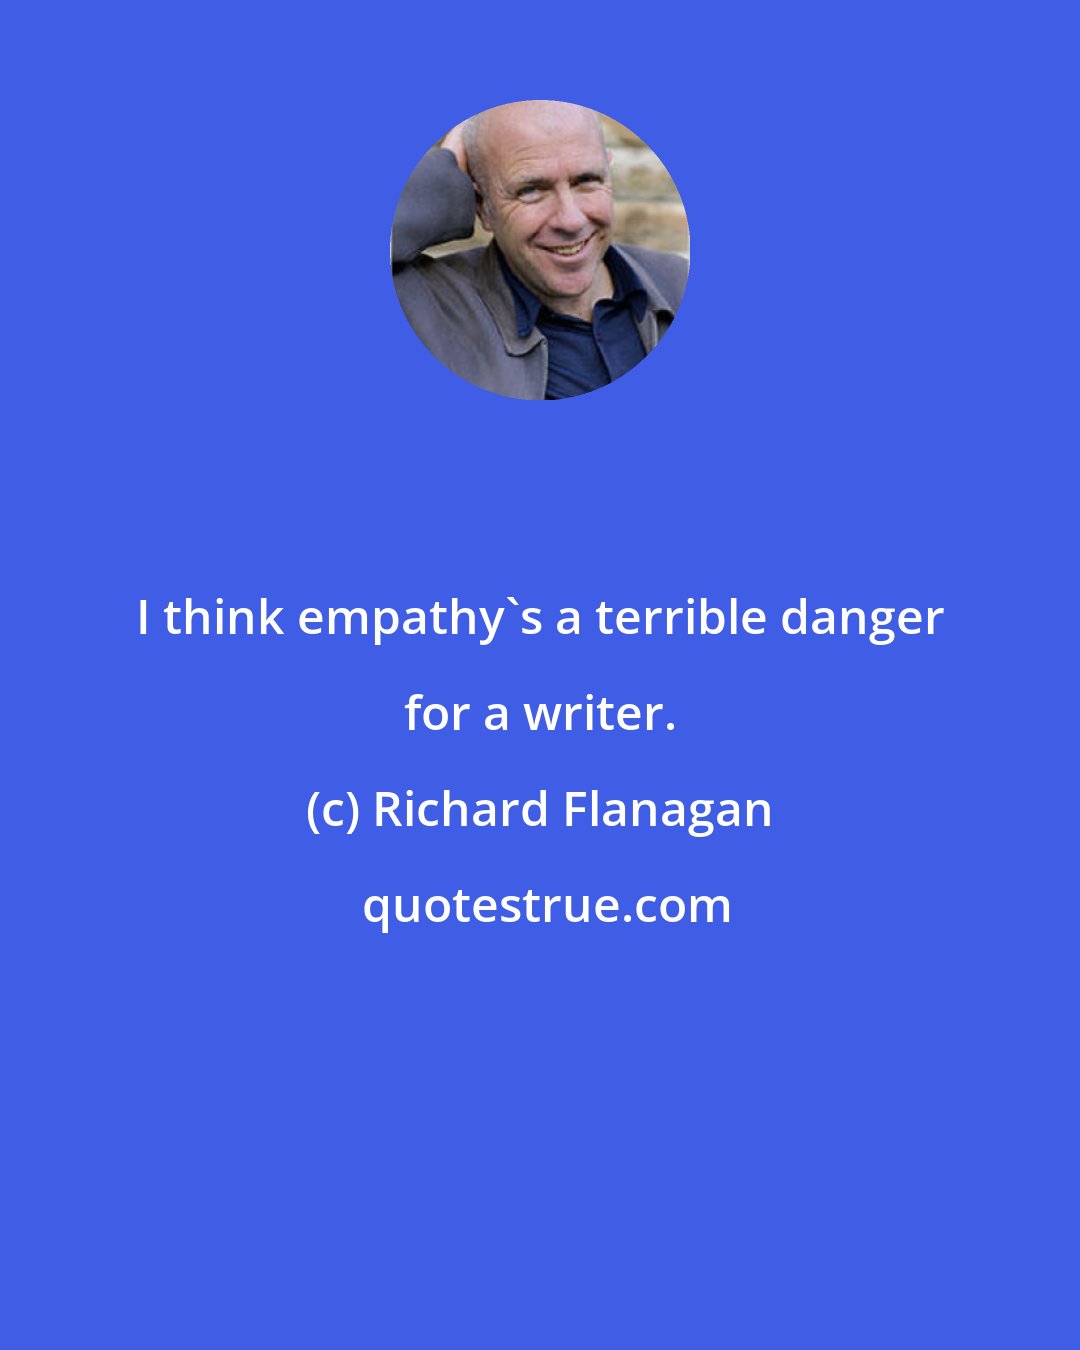 Richard Flanagan: I think empathy's a terrible danger for a writer.